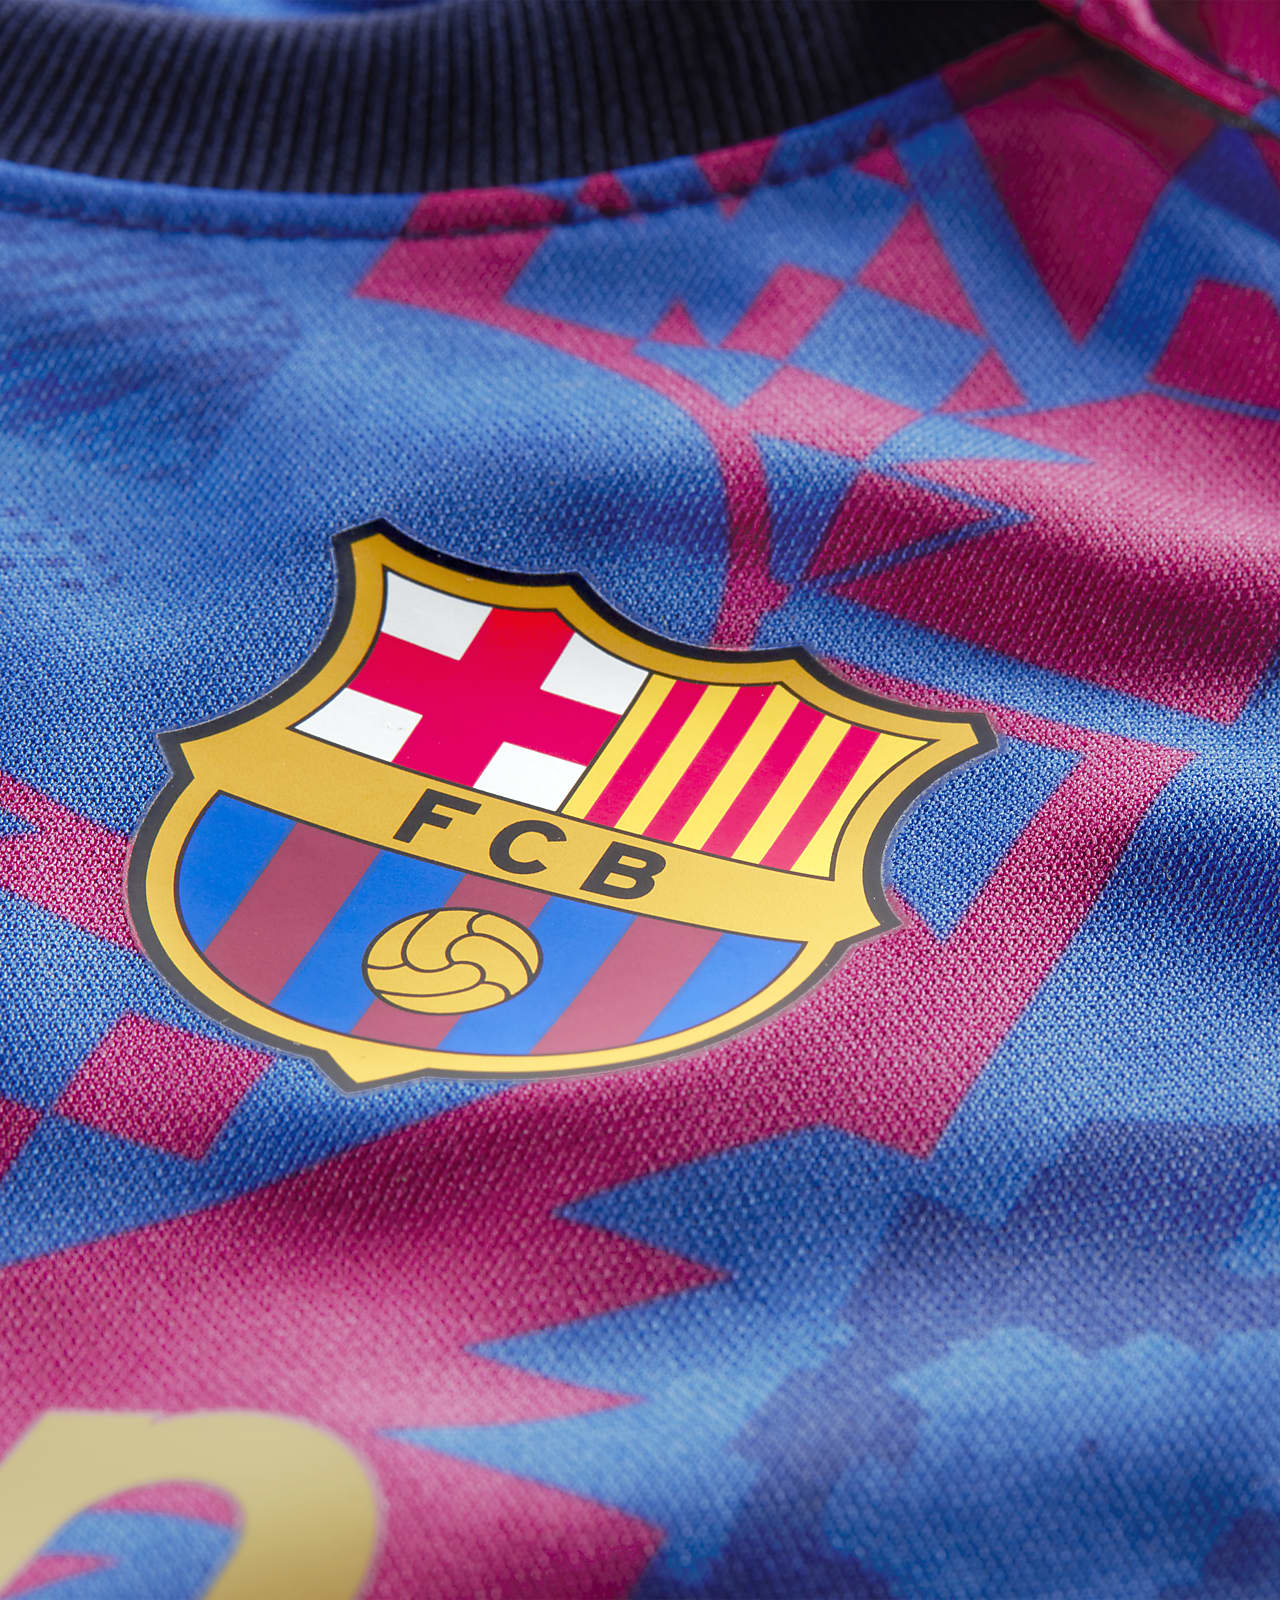 Transparant Kreet Cilia FC Barcelona 2021/22 Third Baby/Toddler Kit. Nike.com